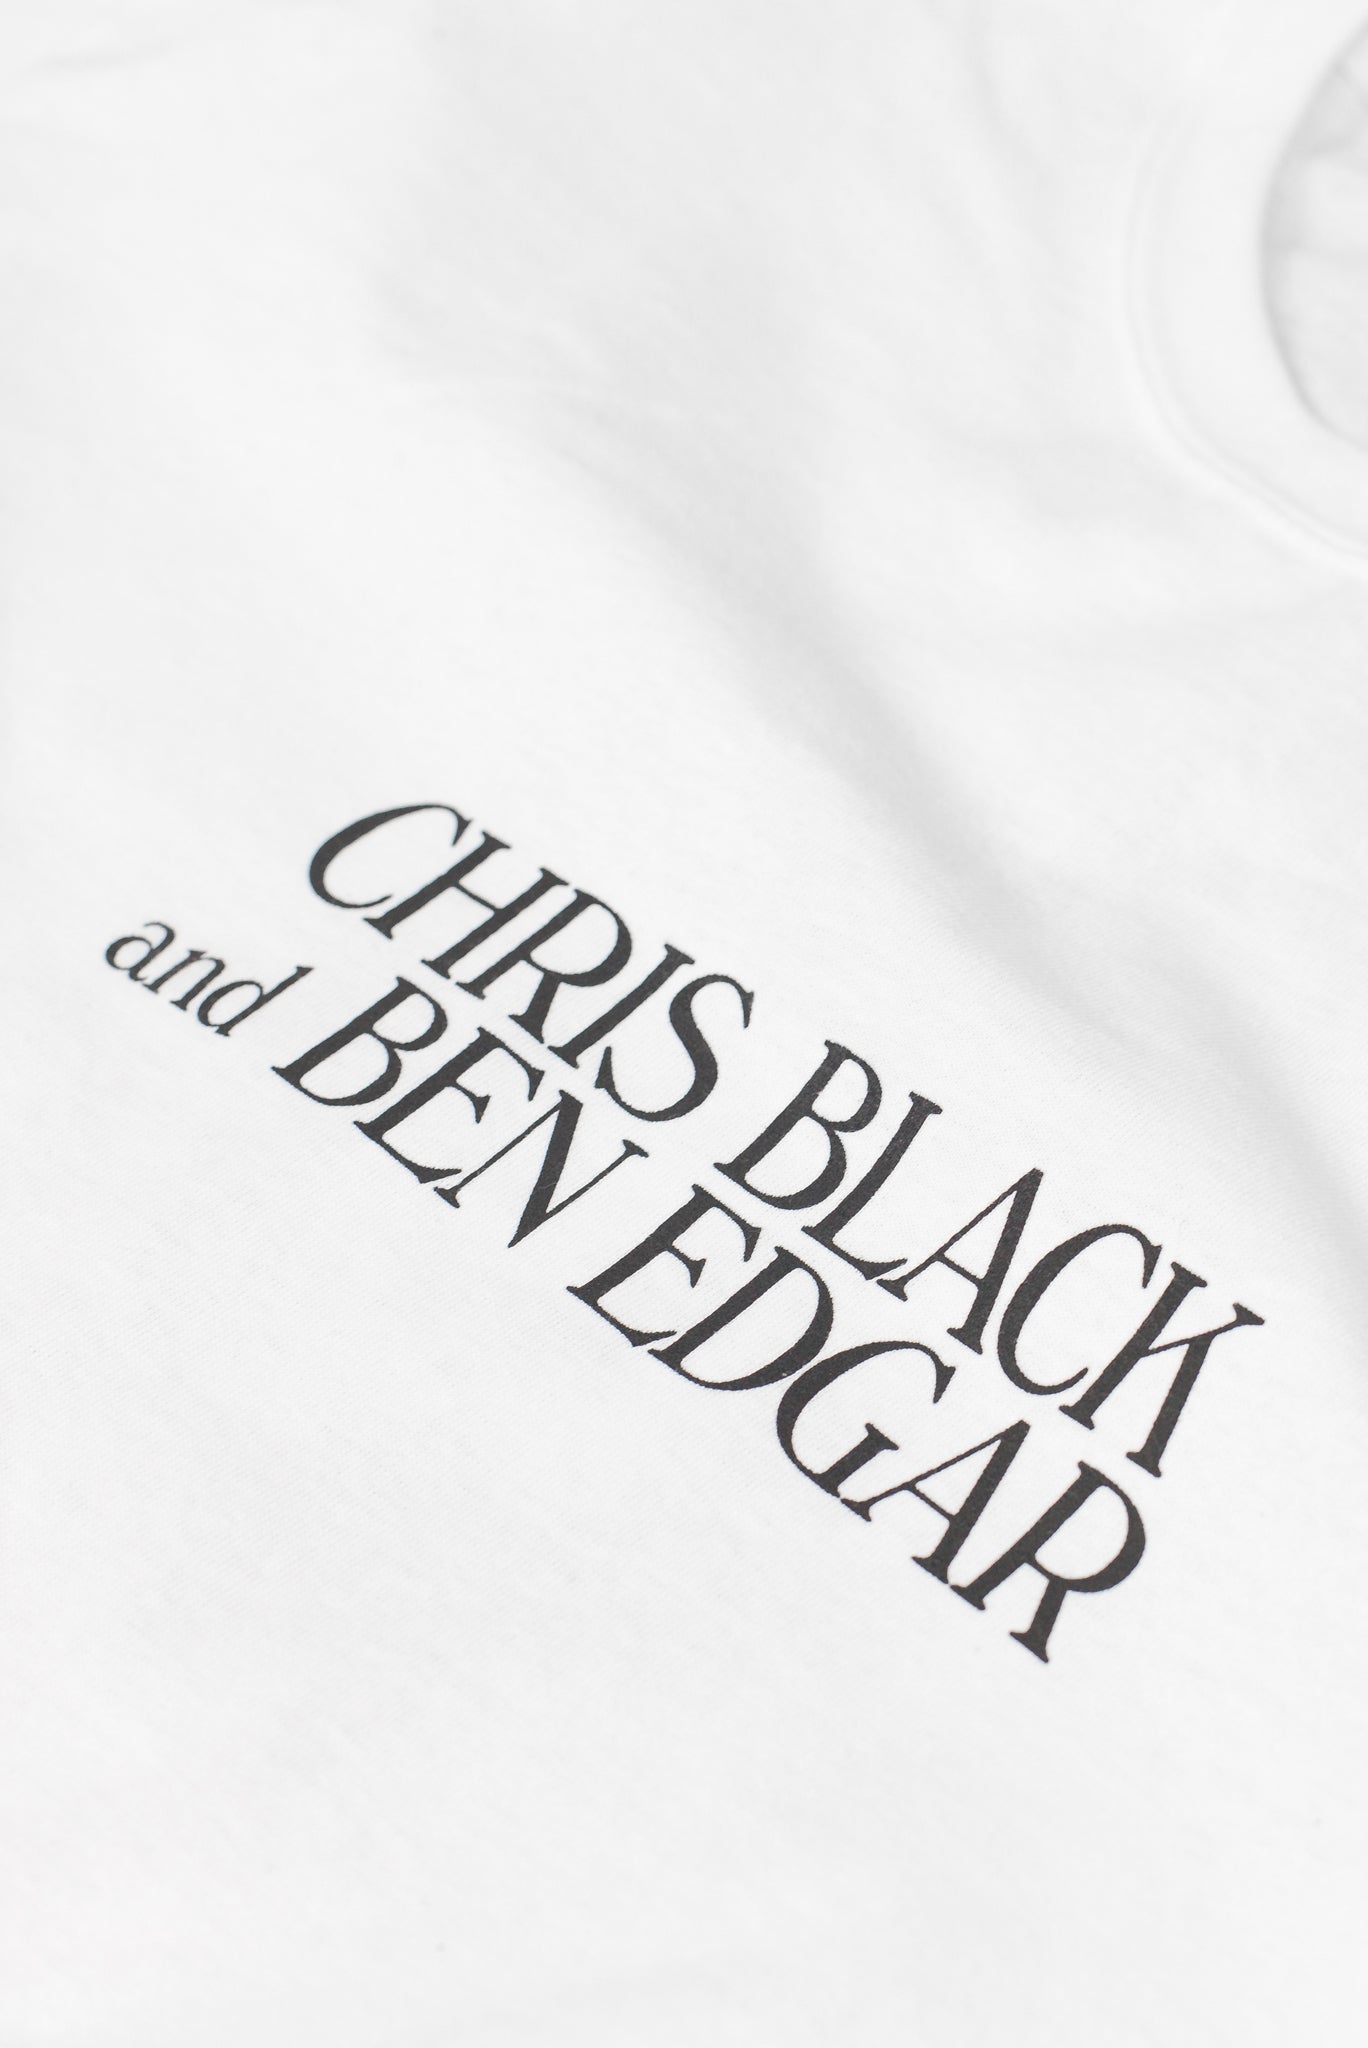 Chris Black & Ben Edgar 